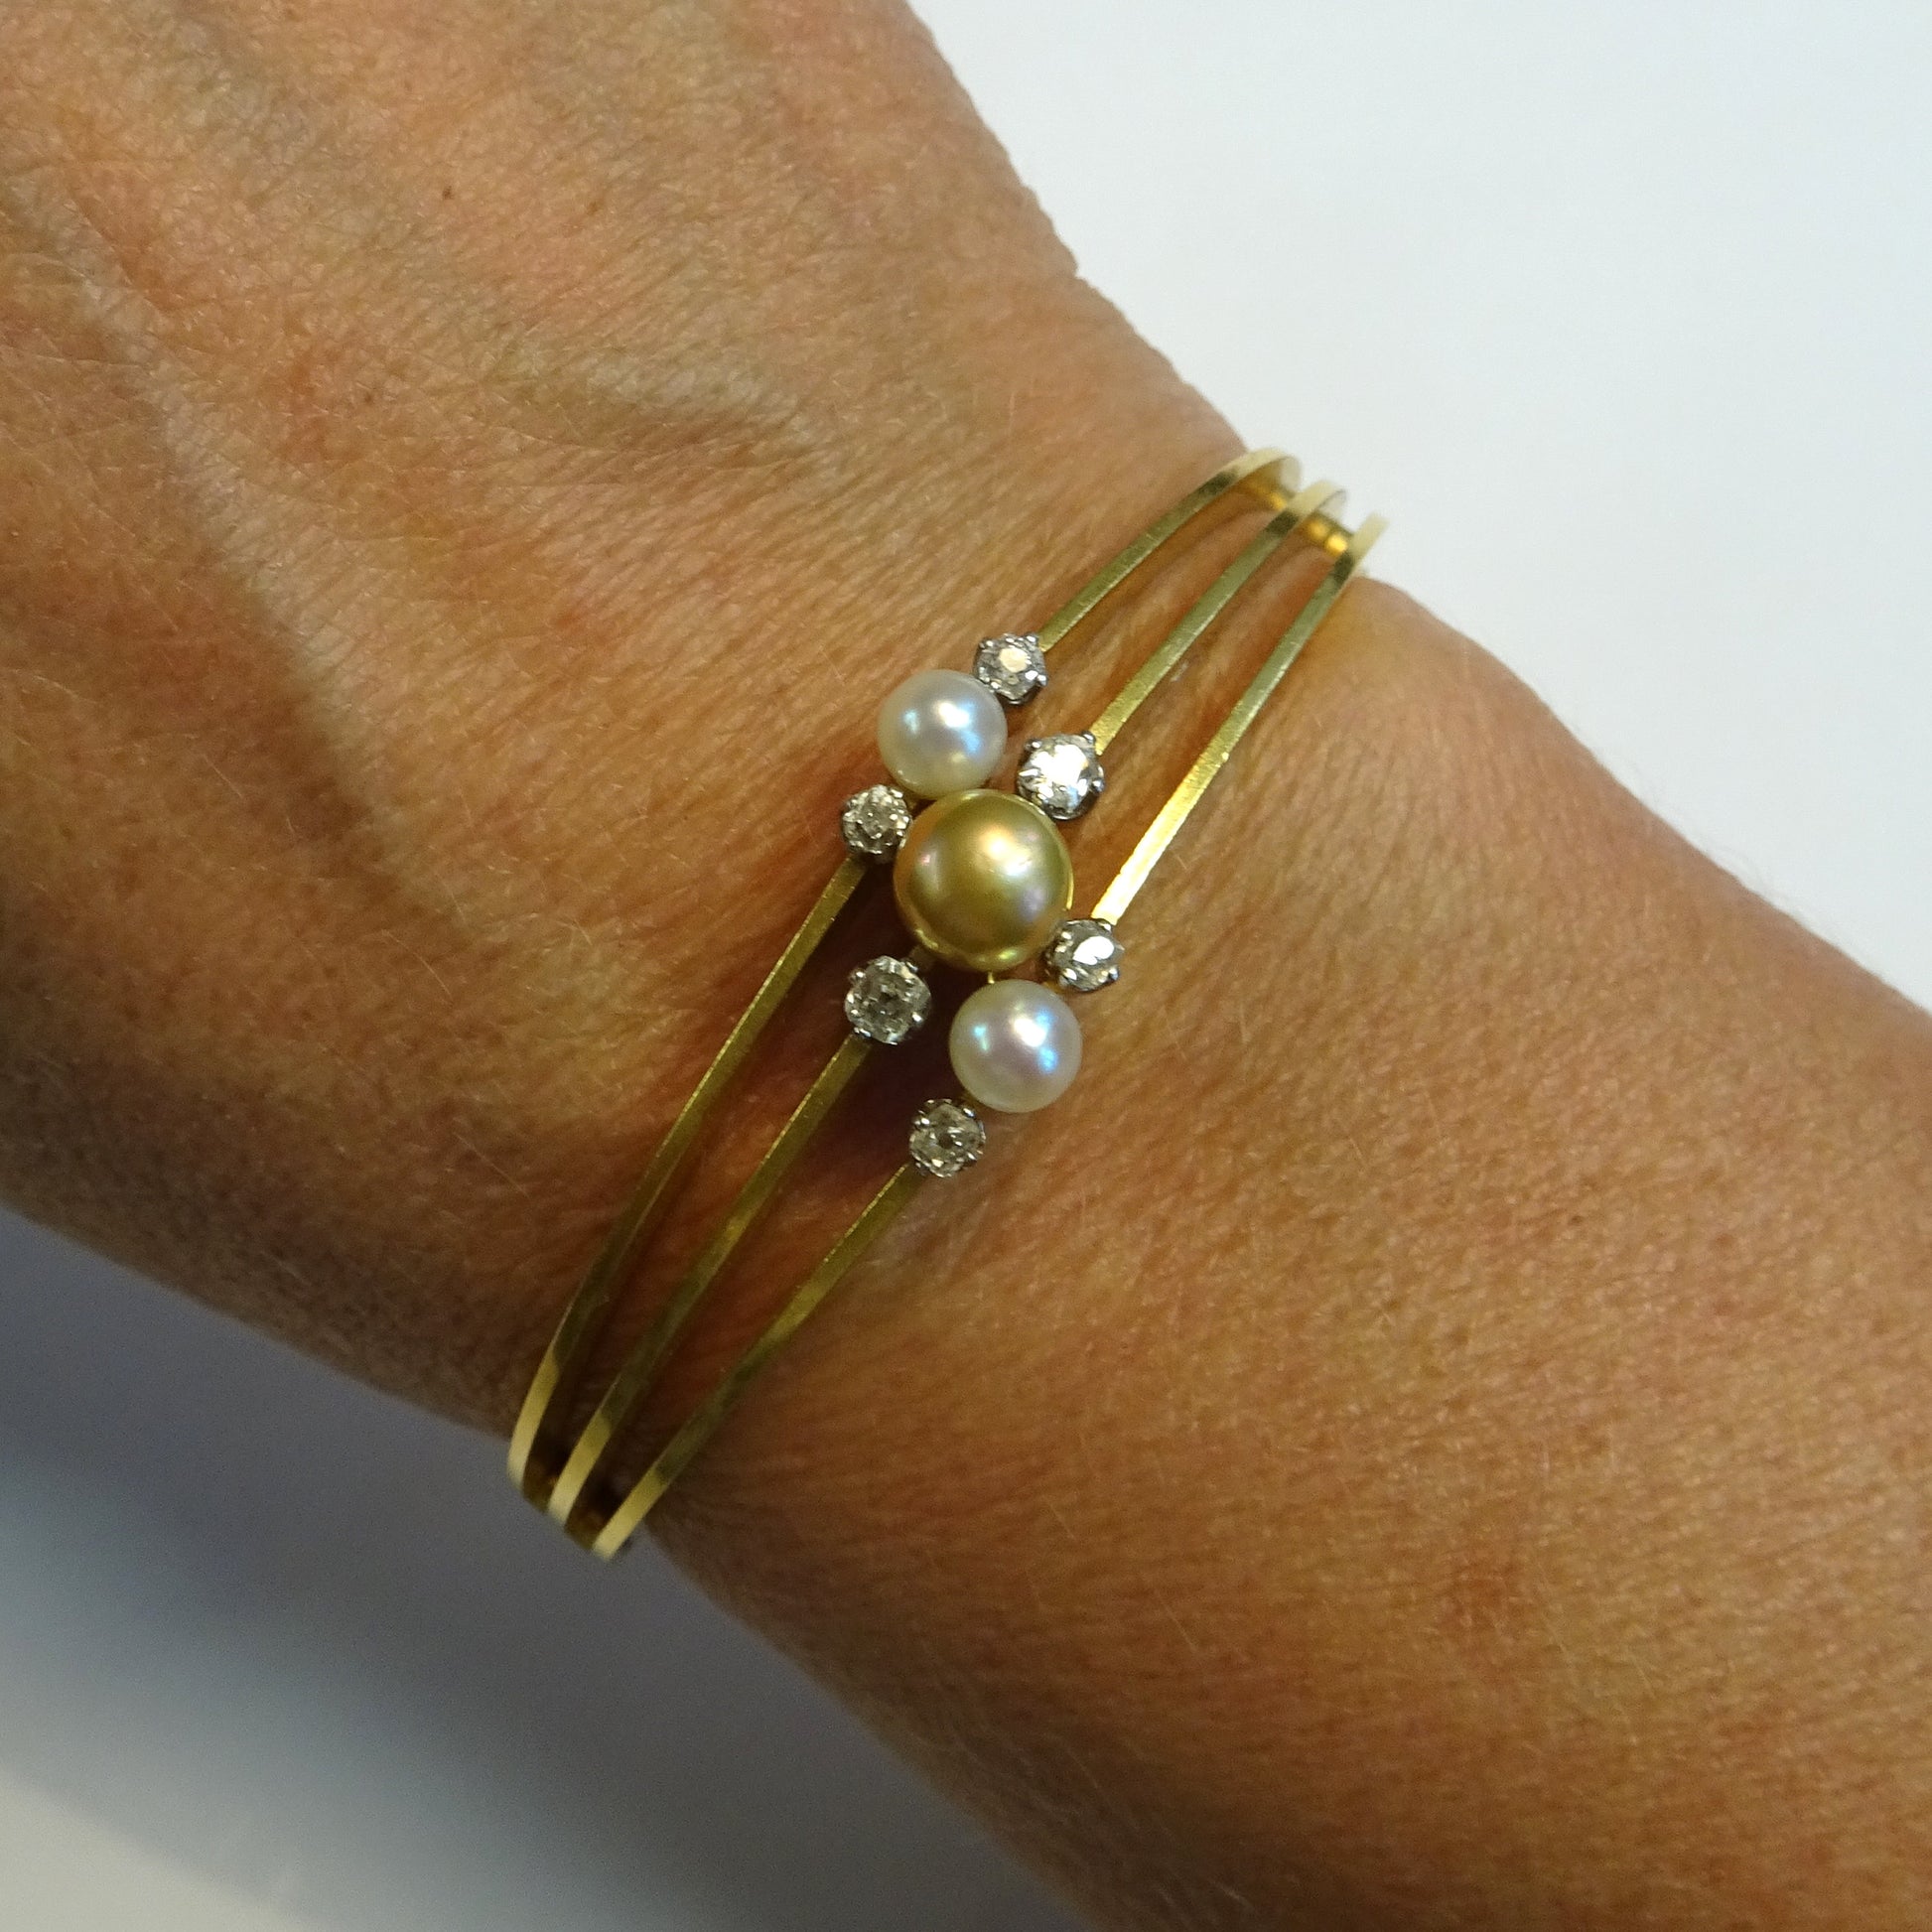 Bapst & Falize Paris Antique 18KT Yellow Gold Natural Pearl Bangle Bracelet worn on wrist